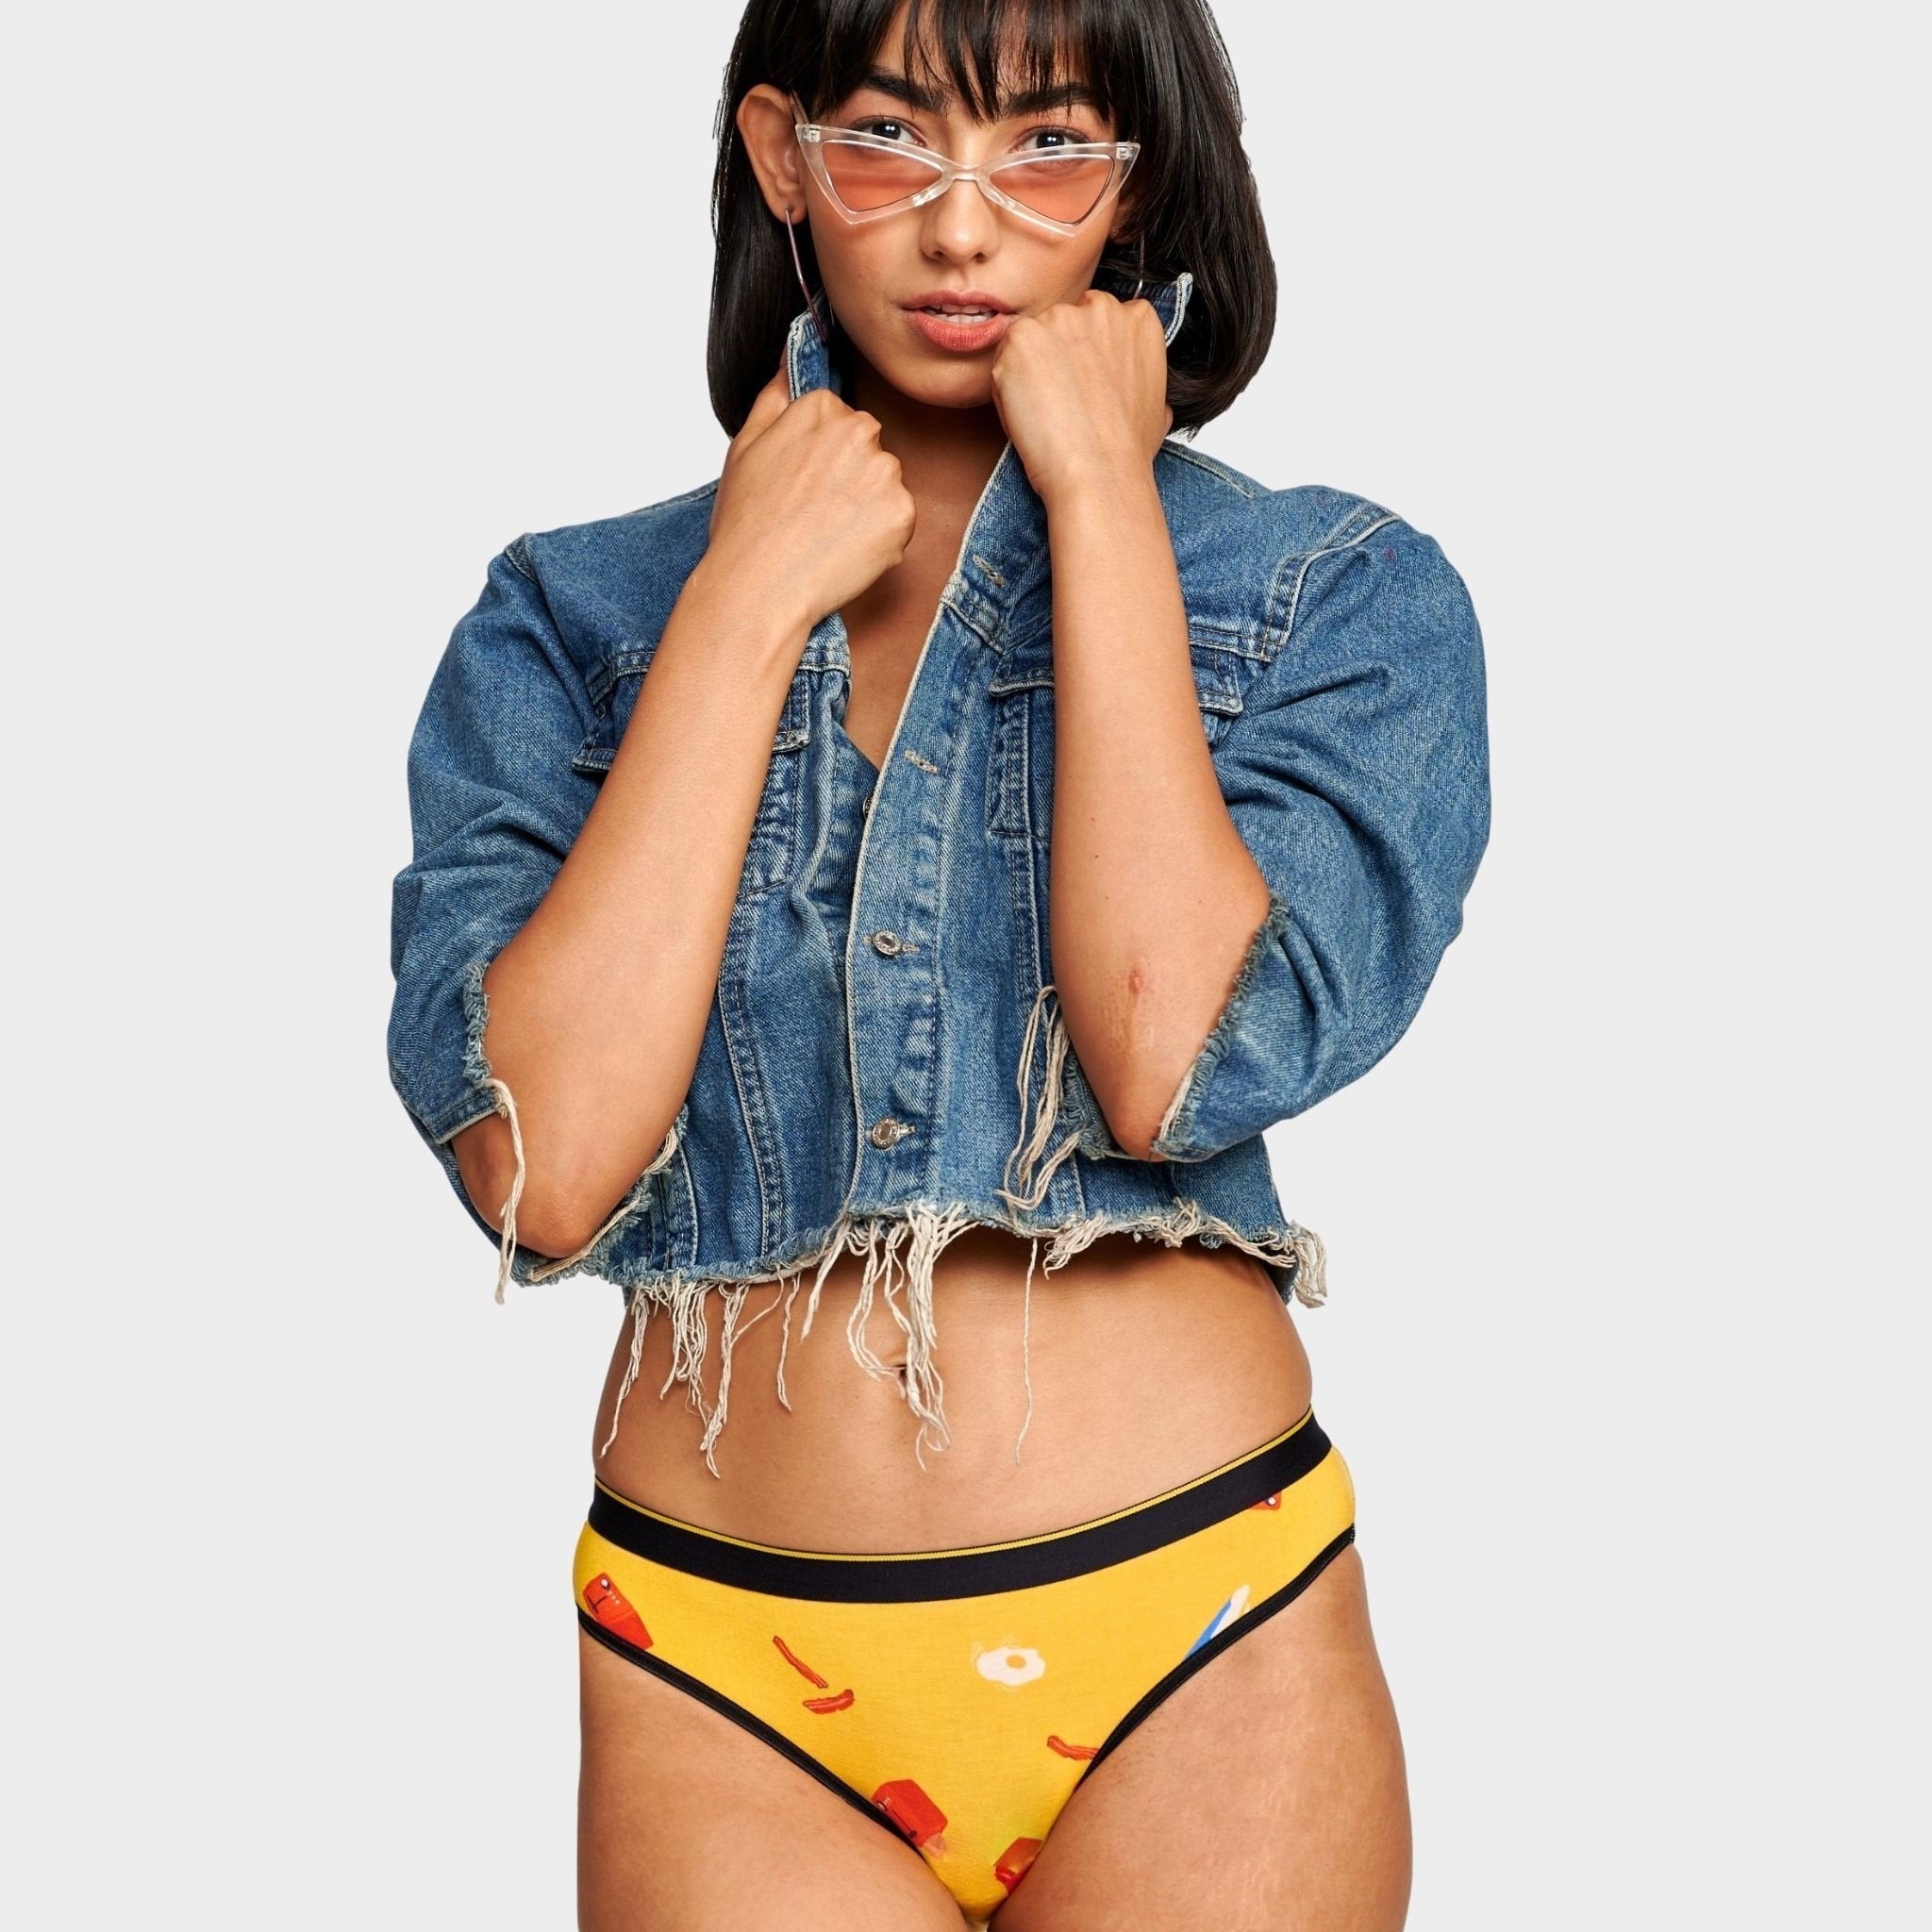 Buy Bikini panties Underwear For Women online - Bummer